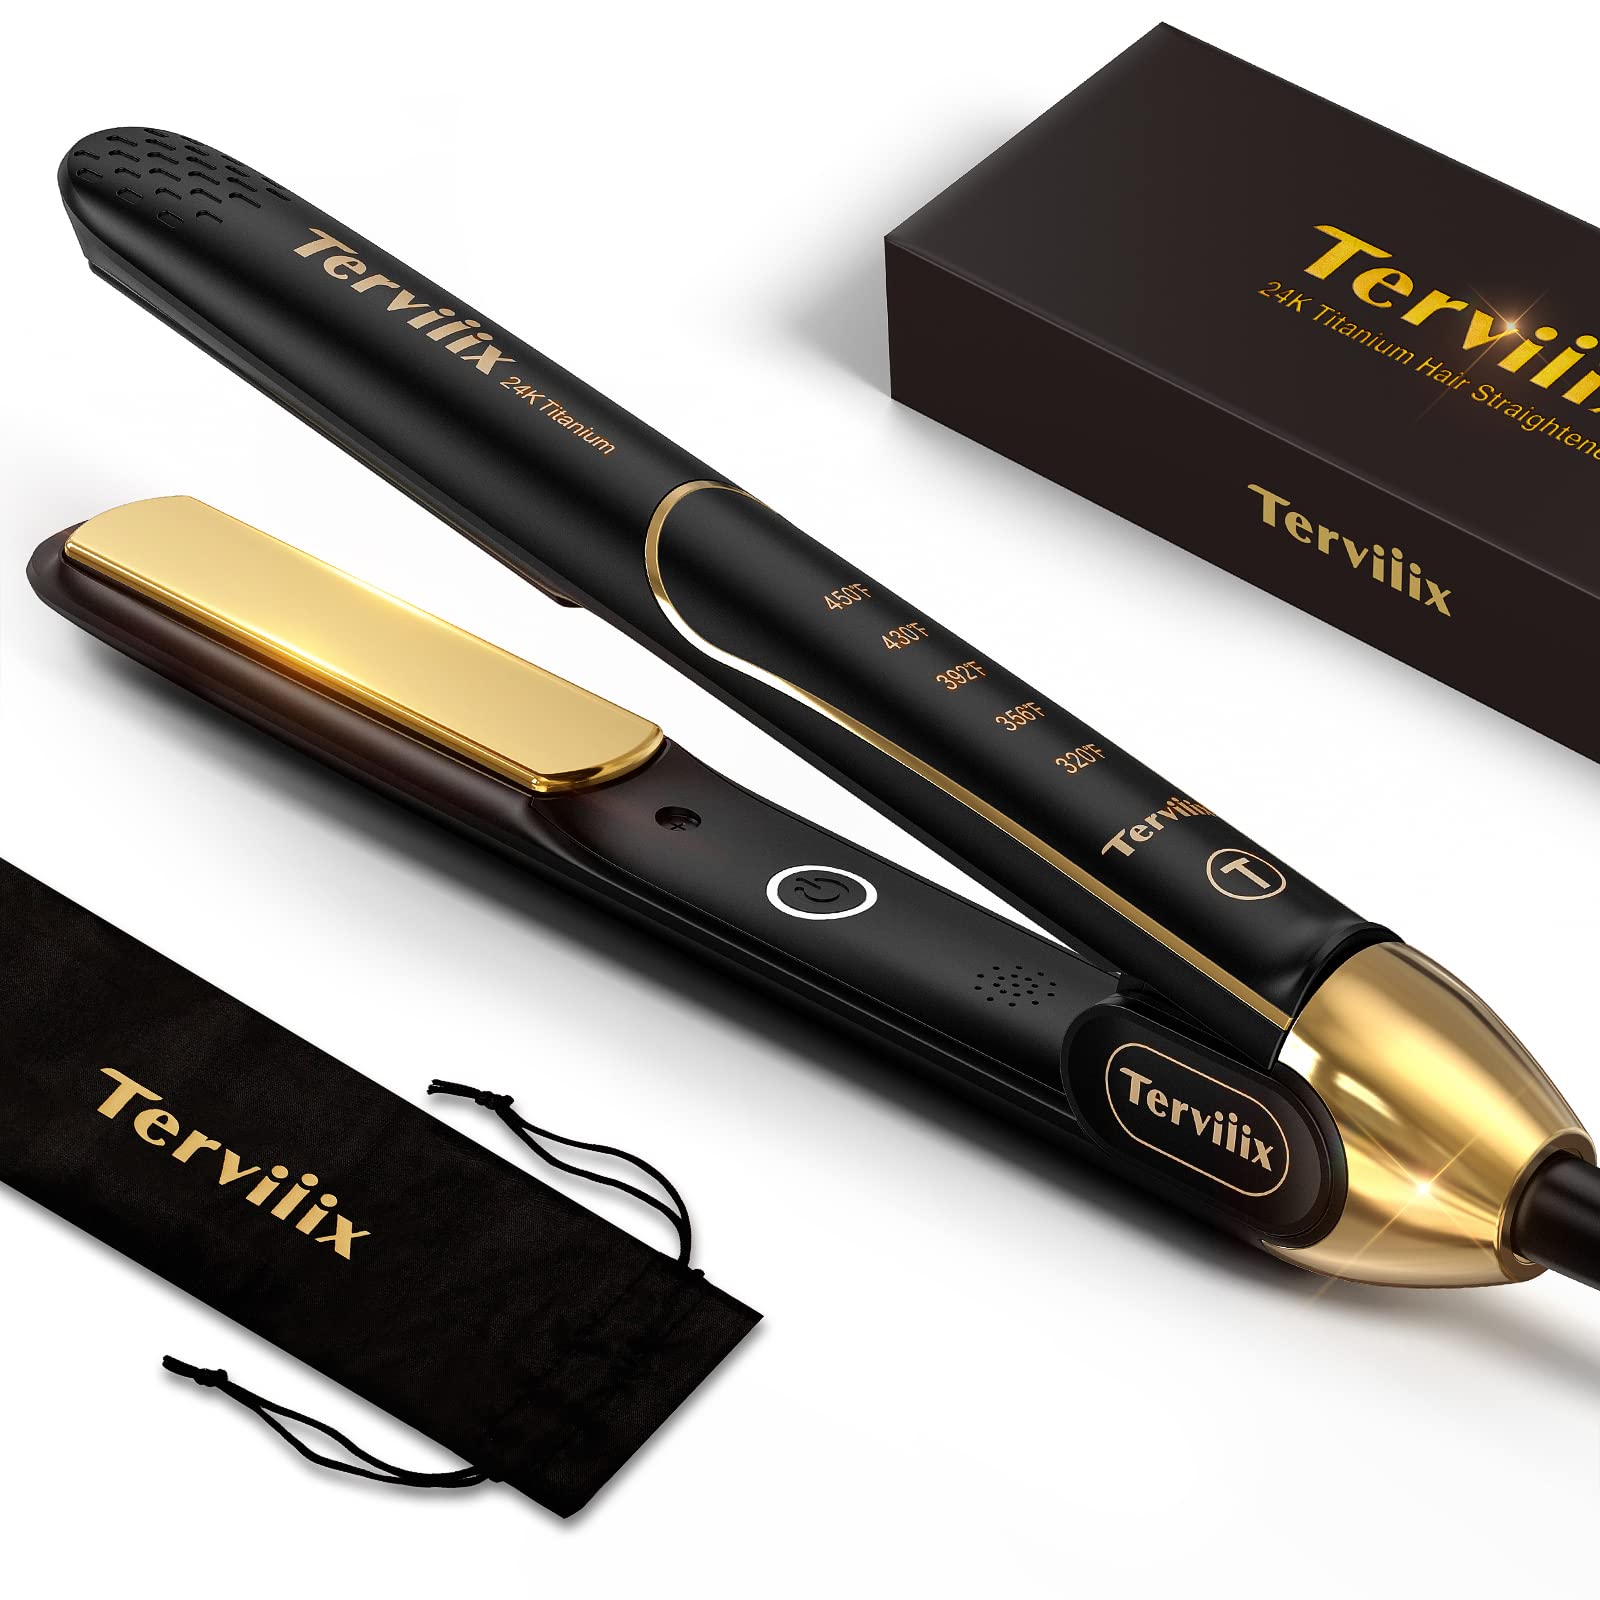 Terviiix 100 Titanium Flat Iron, 24K Salon Professional Hair Straightener and curler 2 in 1, Non-Snagging Straightening Iron for